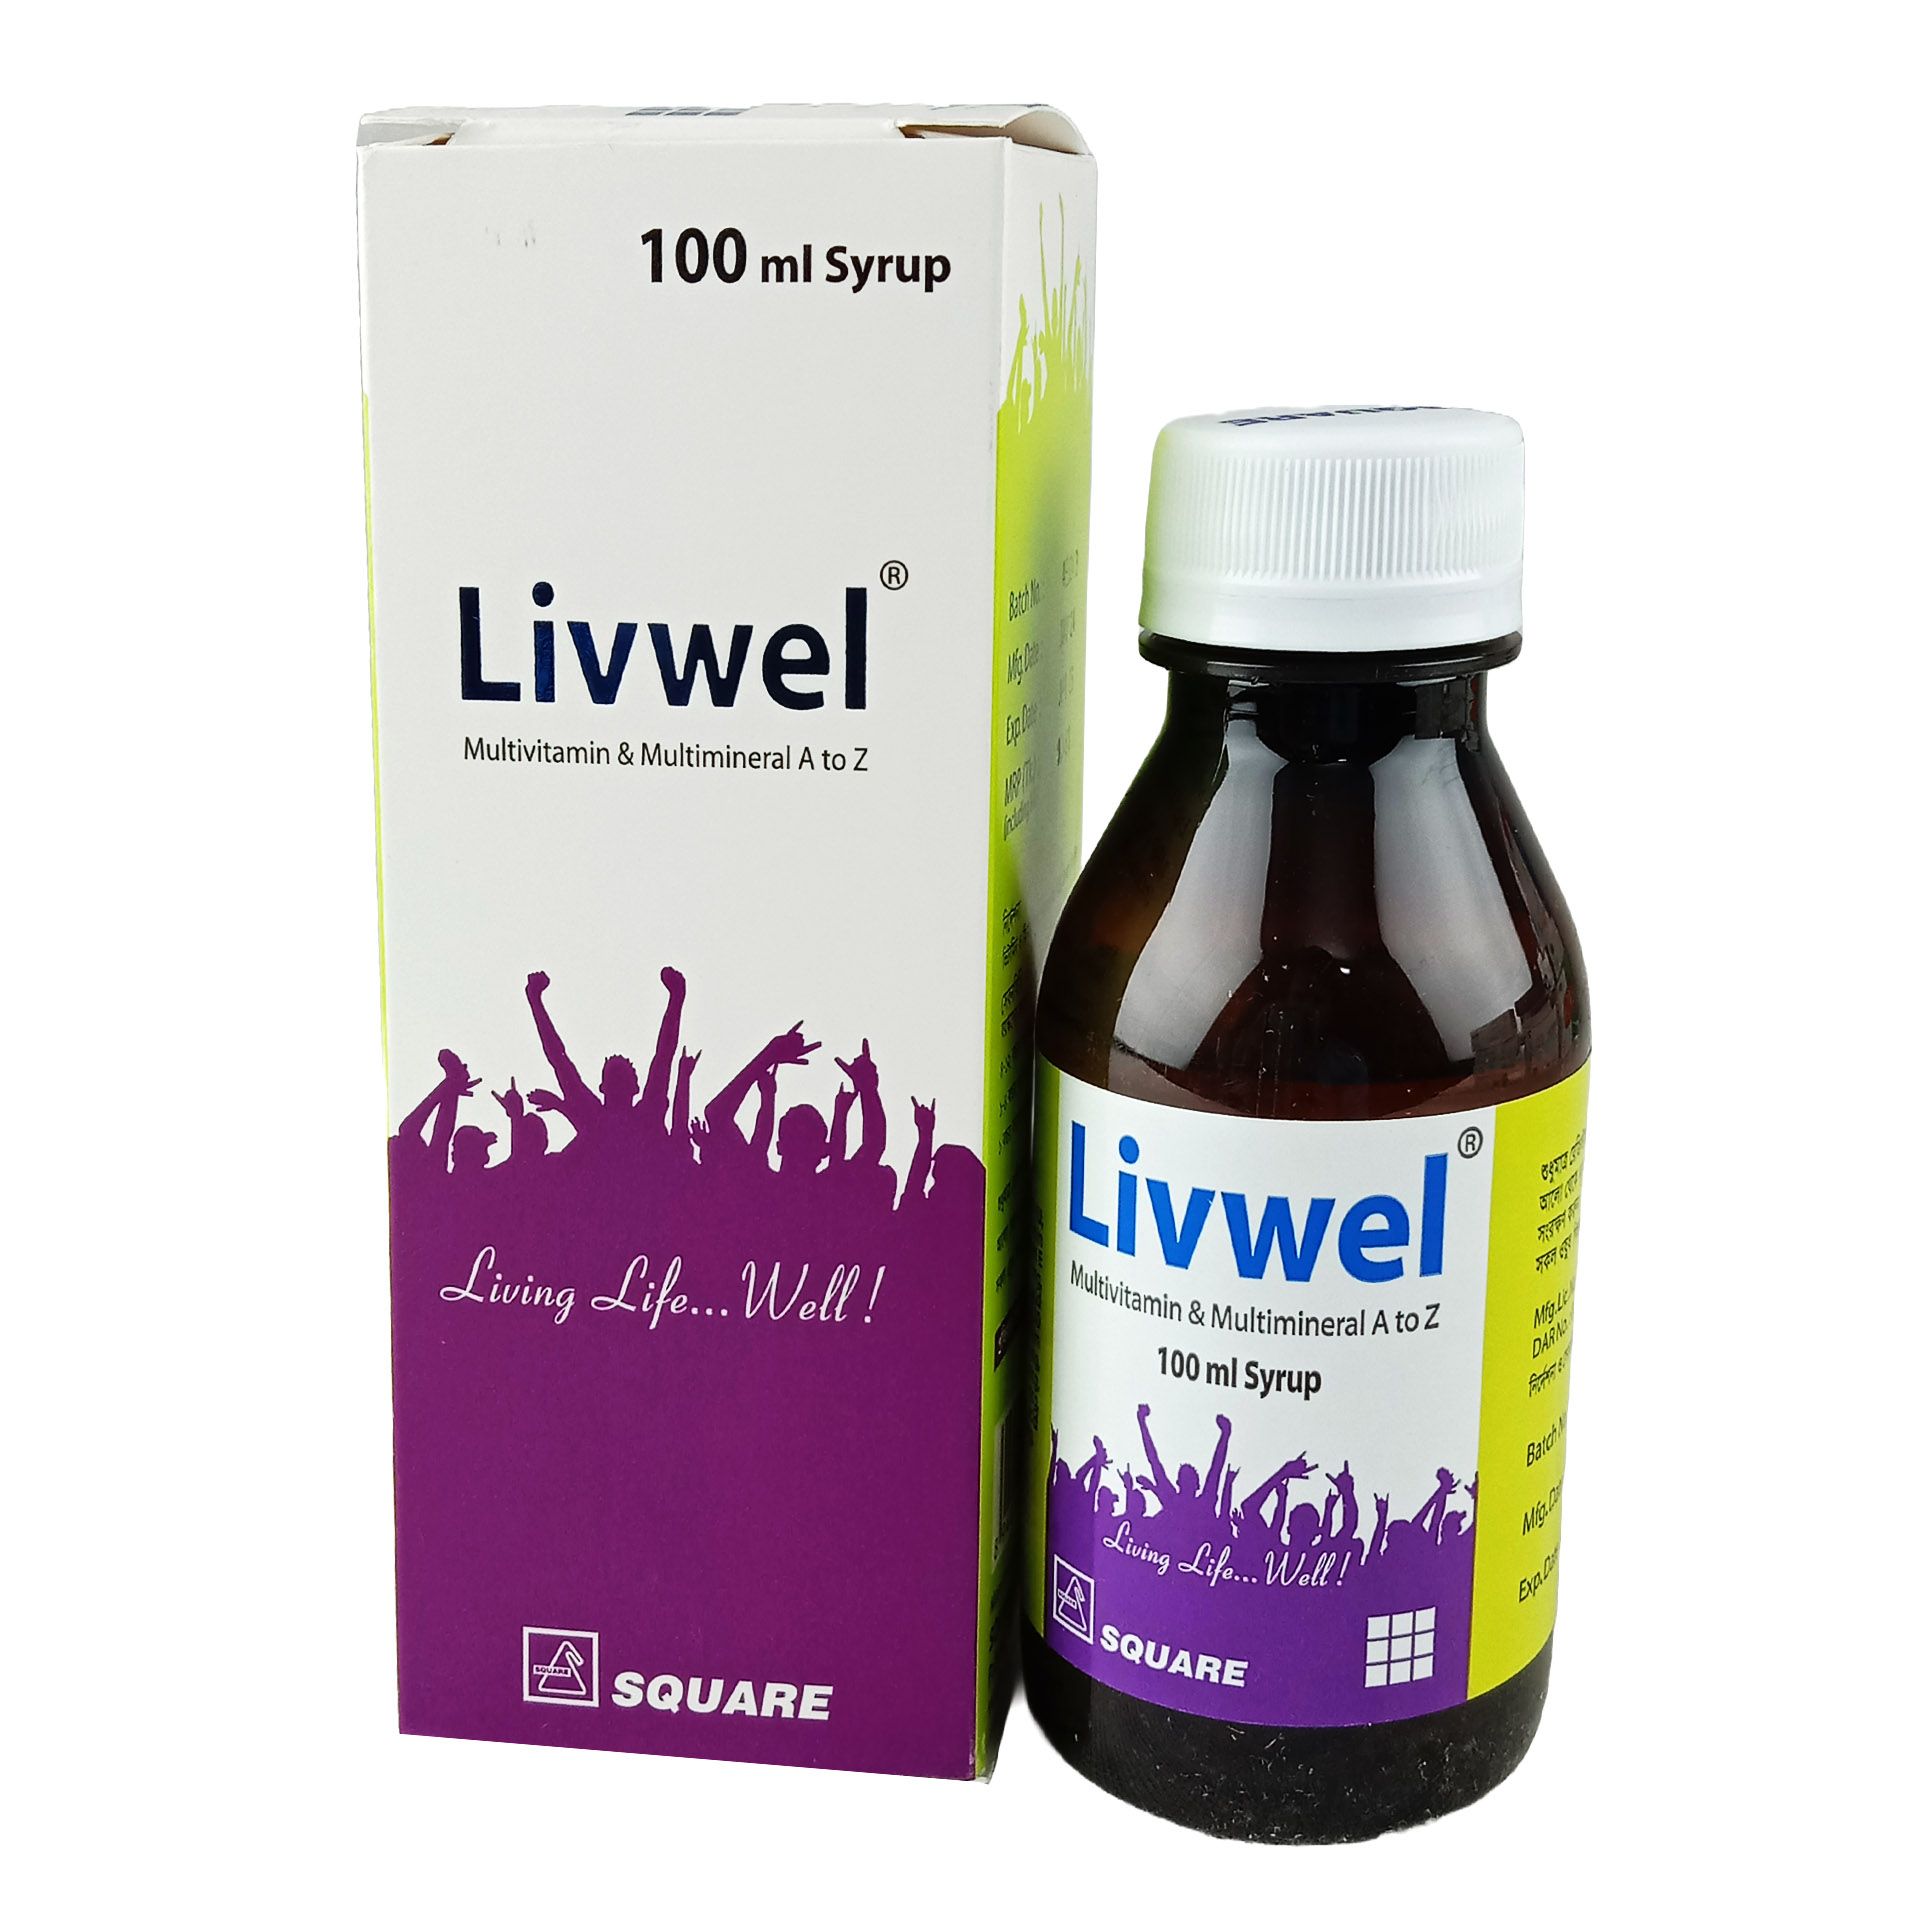 Livwel 100ml Syrup